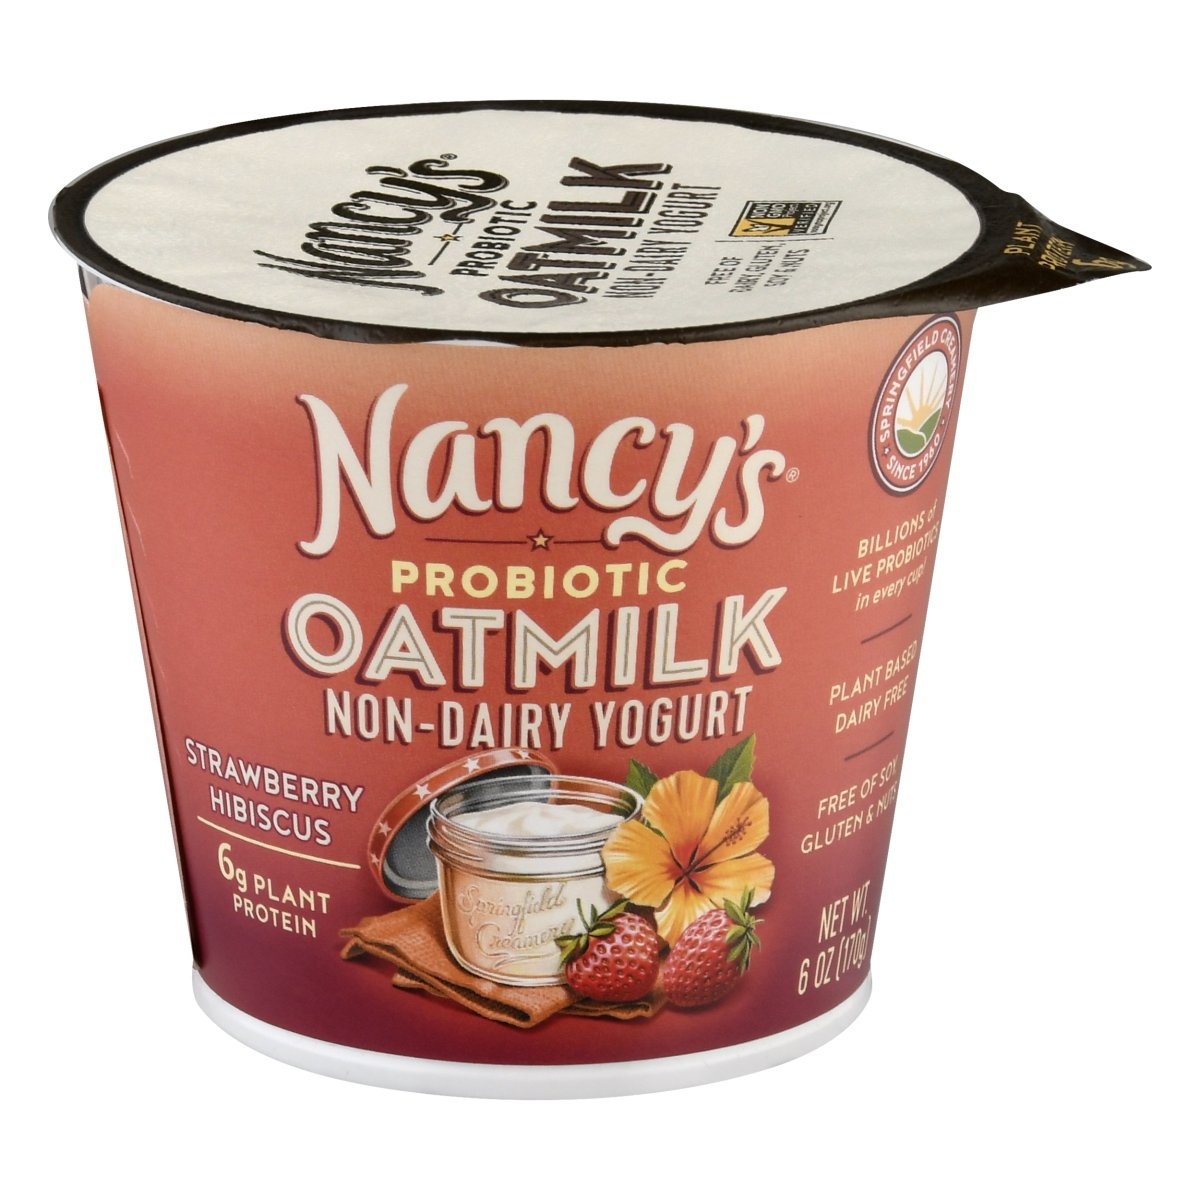 slide 1 of 1, Nancy's Probiotic Oatmilk Non-Dairy Yogurt, Strawberry Hibiscus, 6 oz